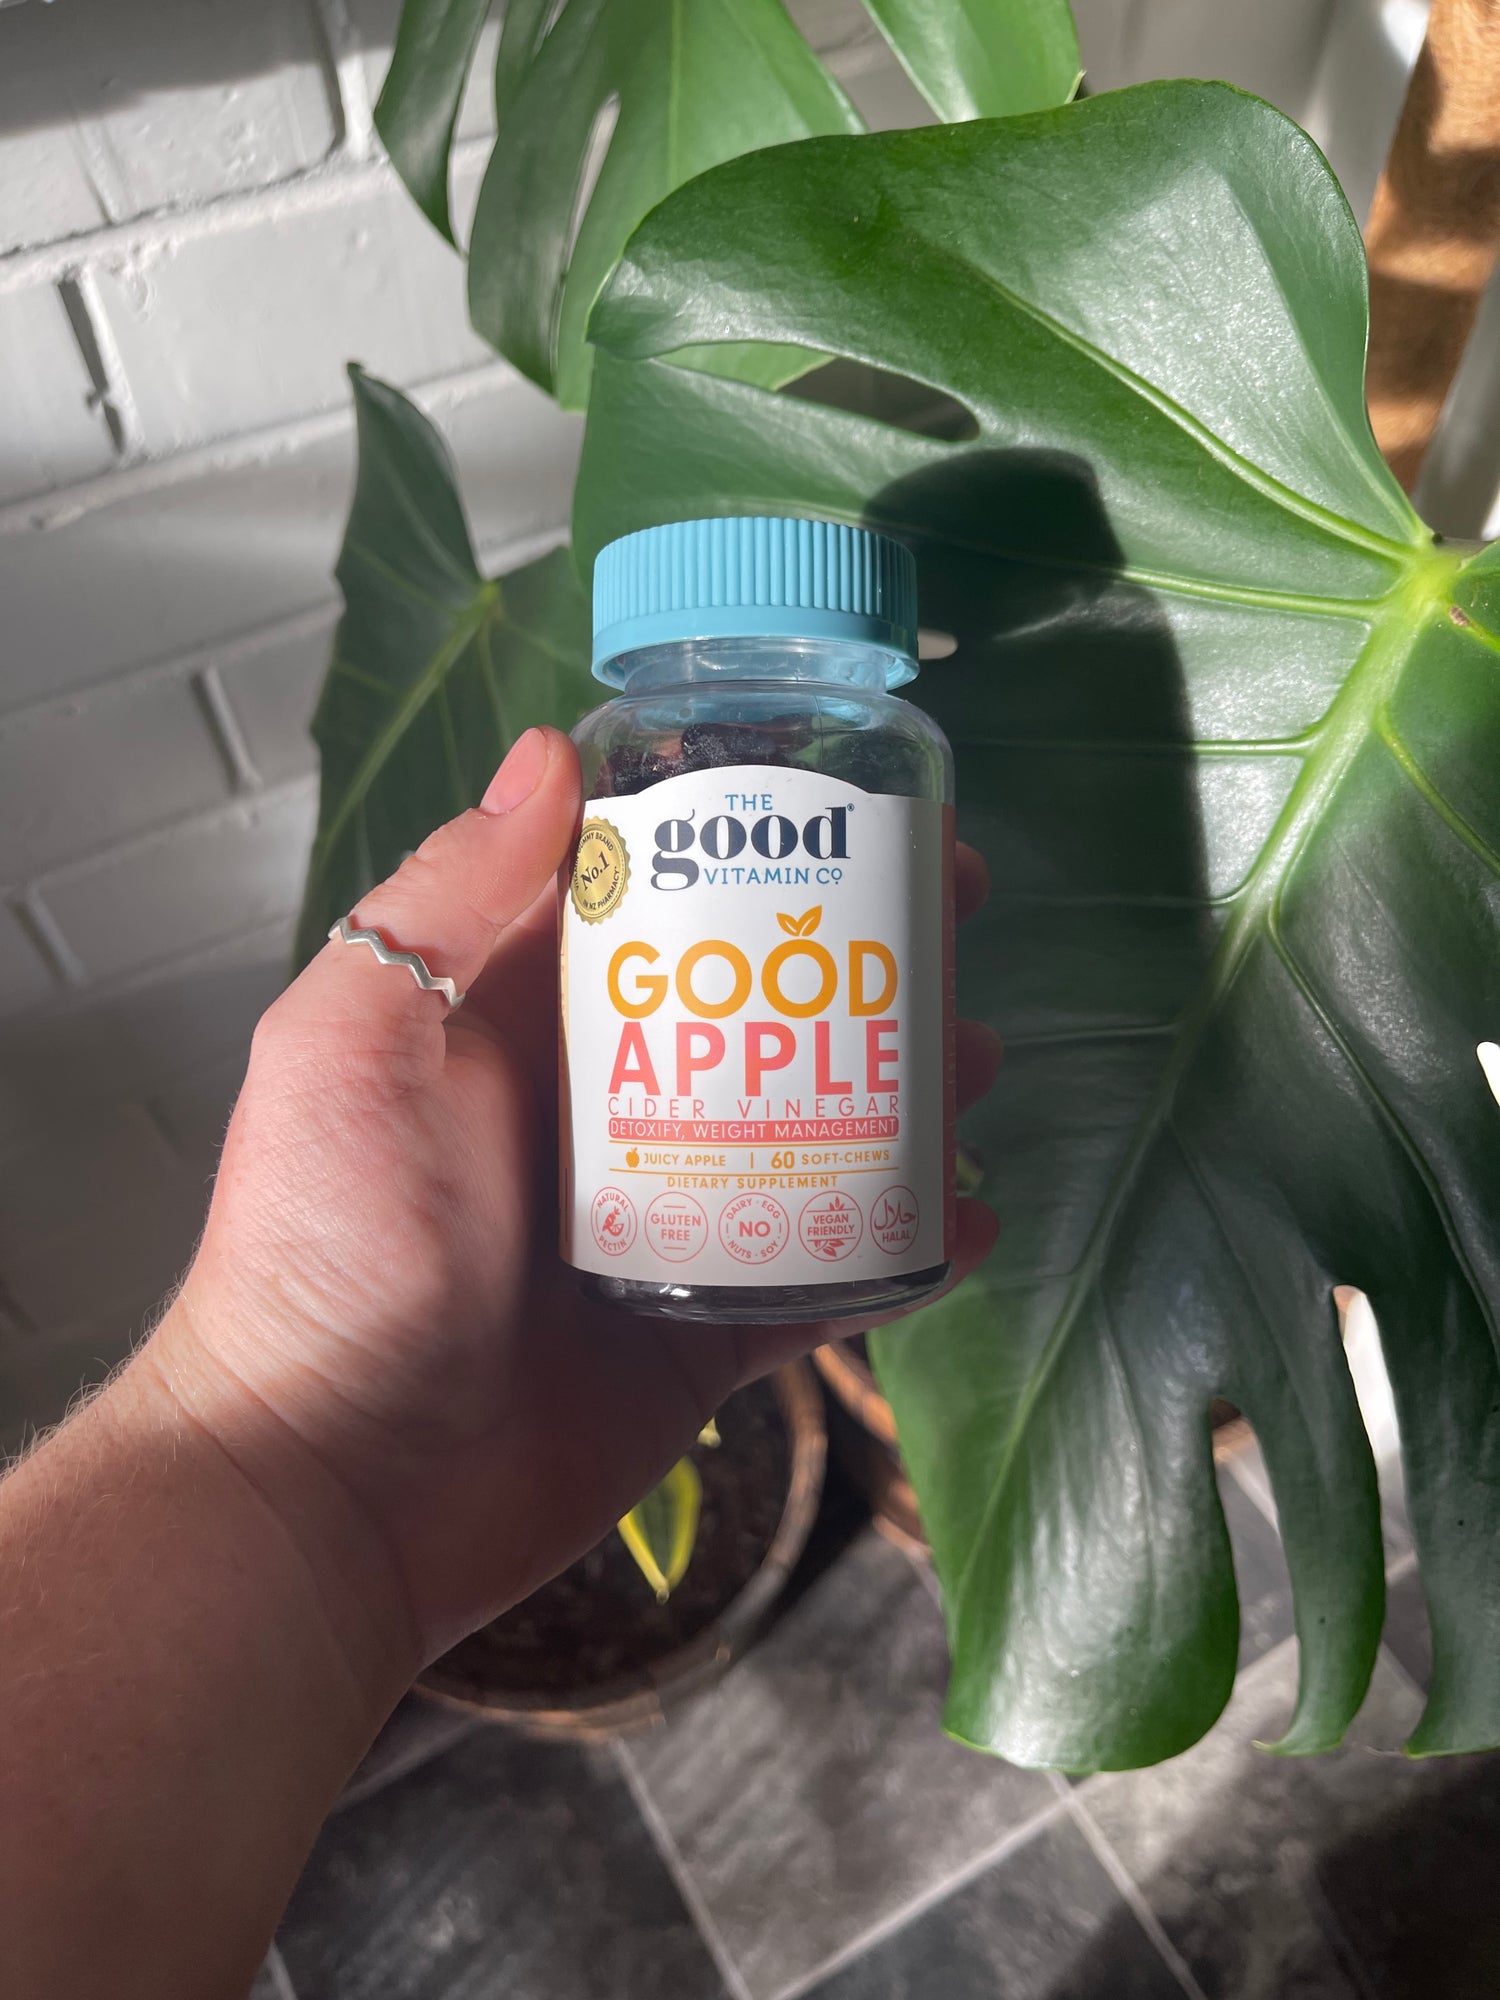 The Good Vitamin Co